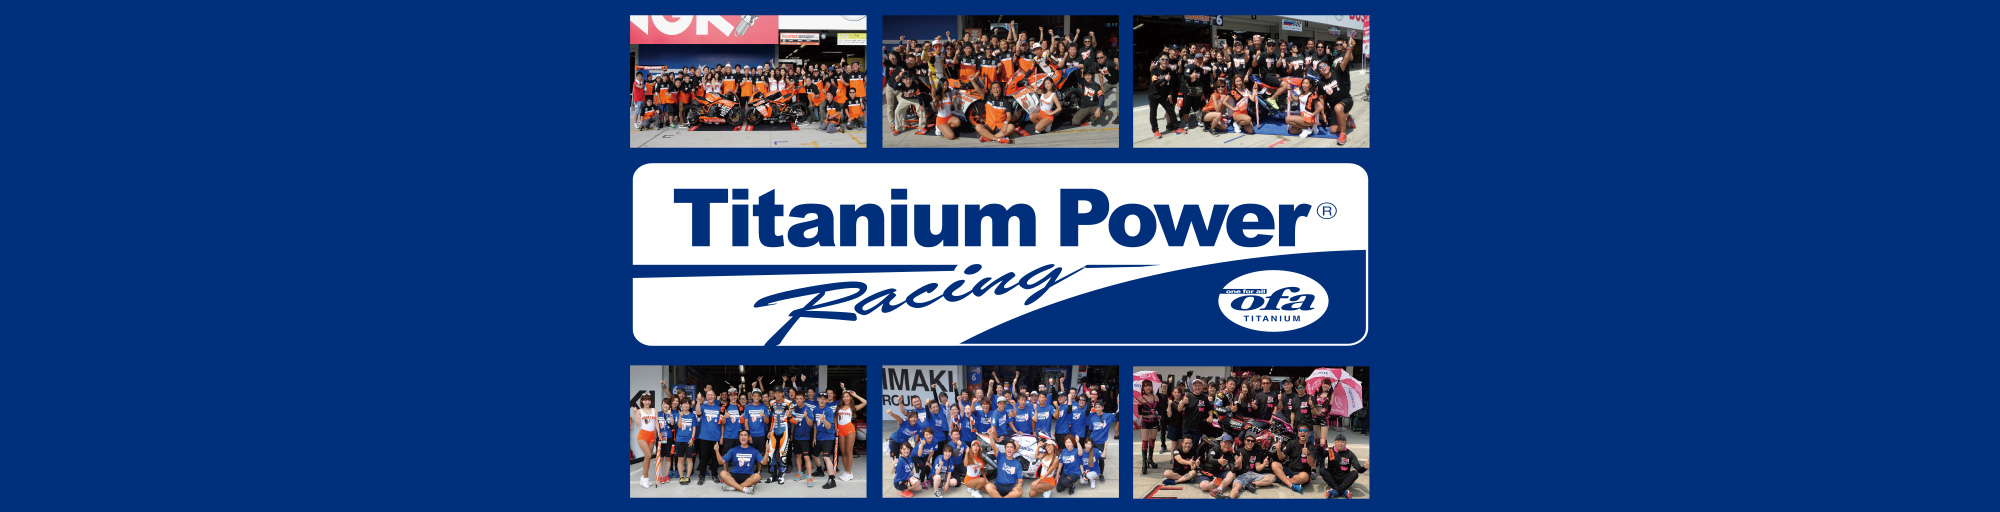 Titanium Power Racing